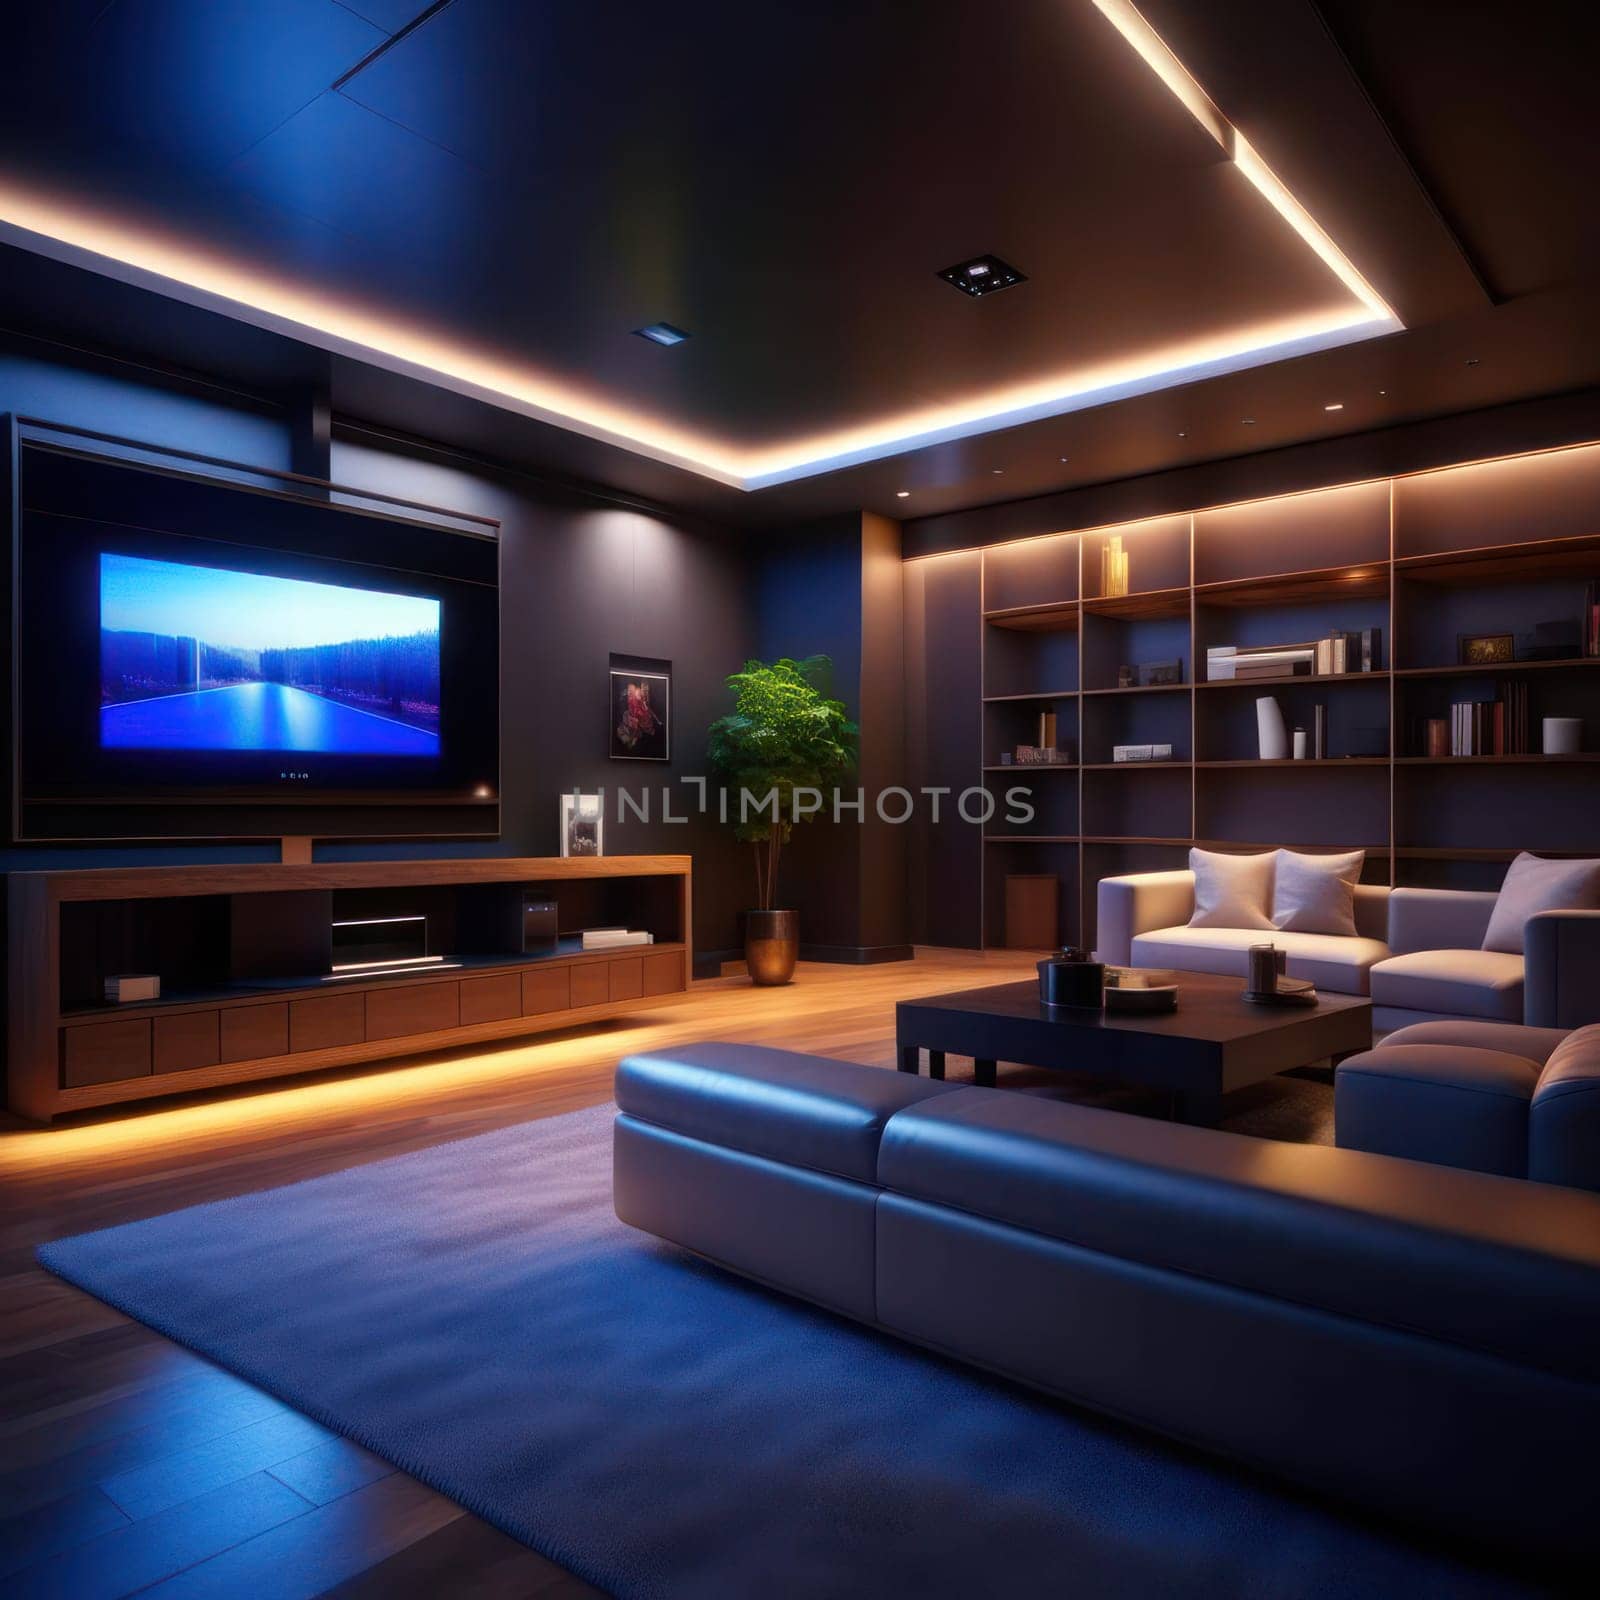 Home Cinema. Image created by AI